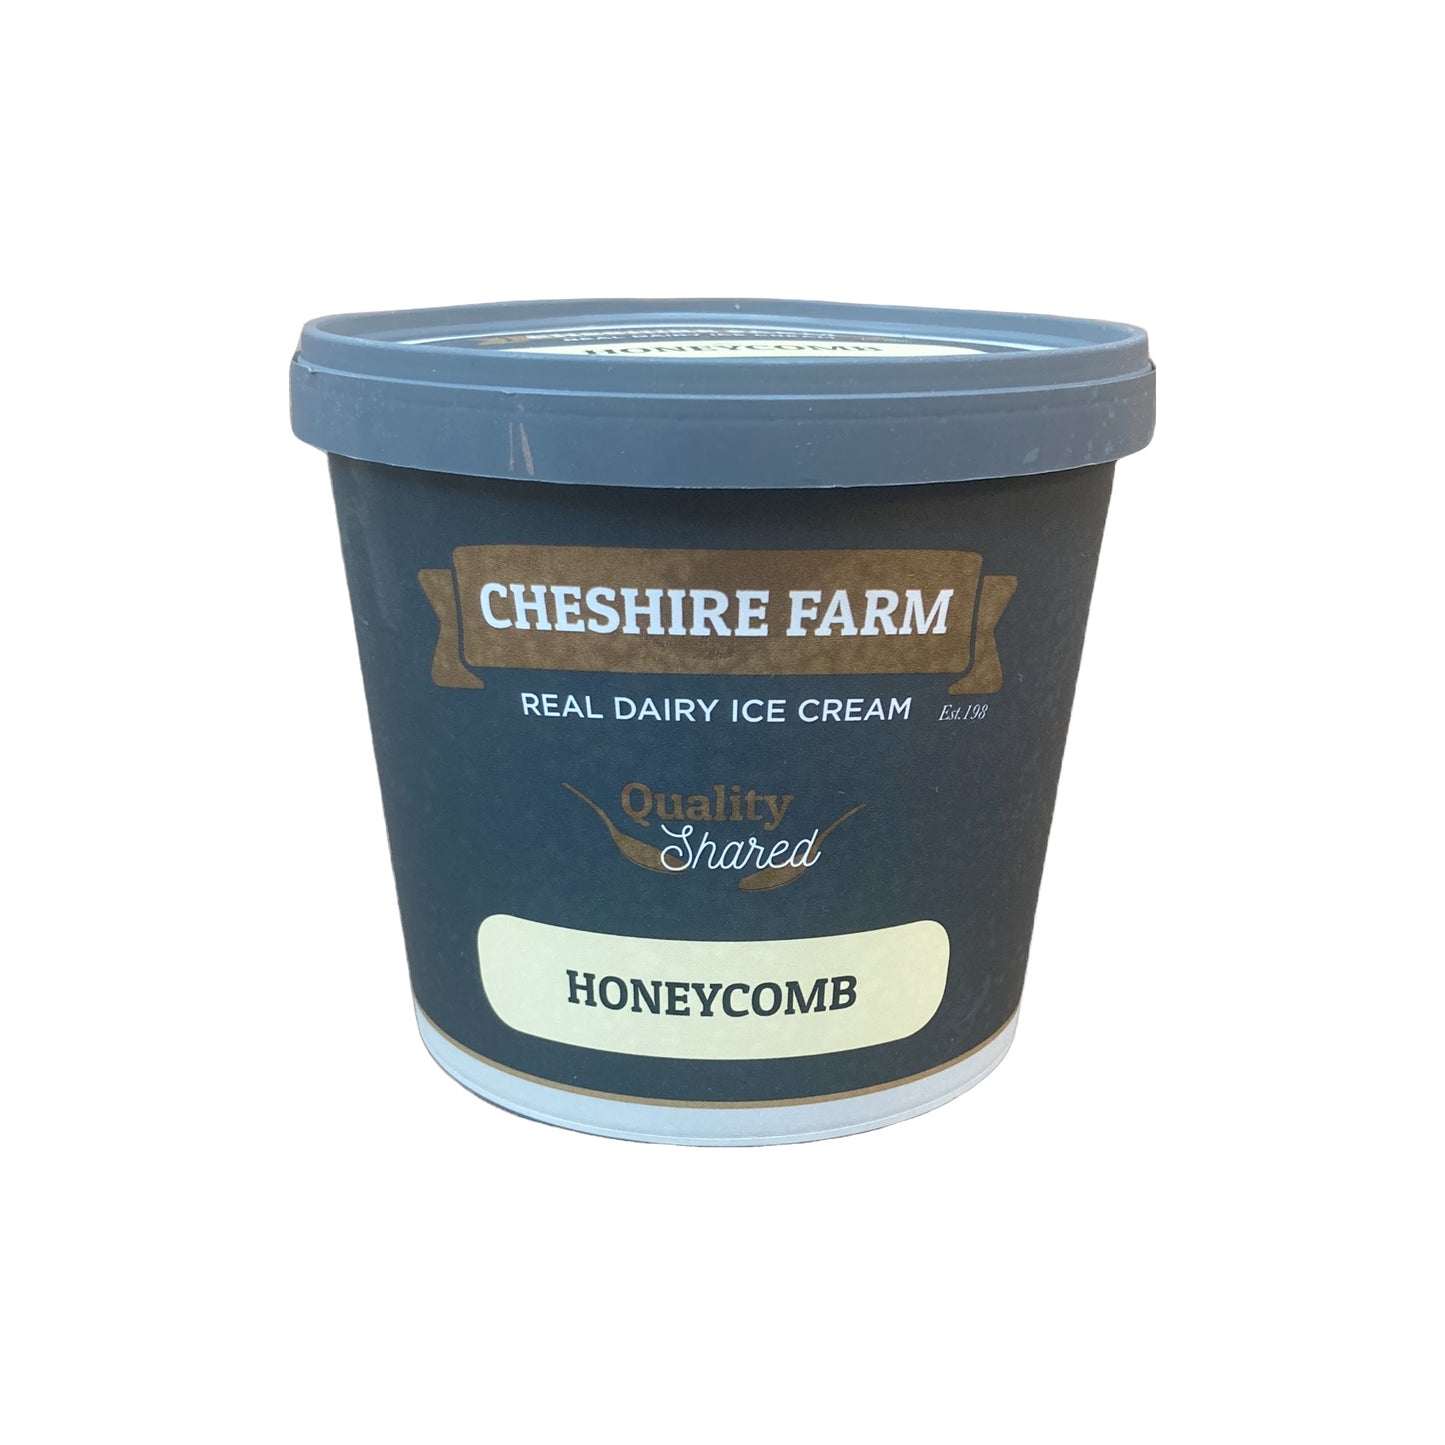 Cheshire Farm Real Dairy Honeycomb Ice Cream 1 Litre Tub